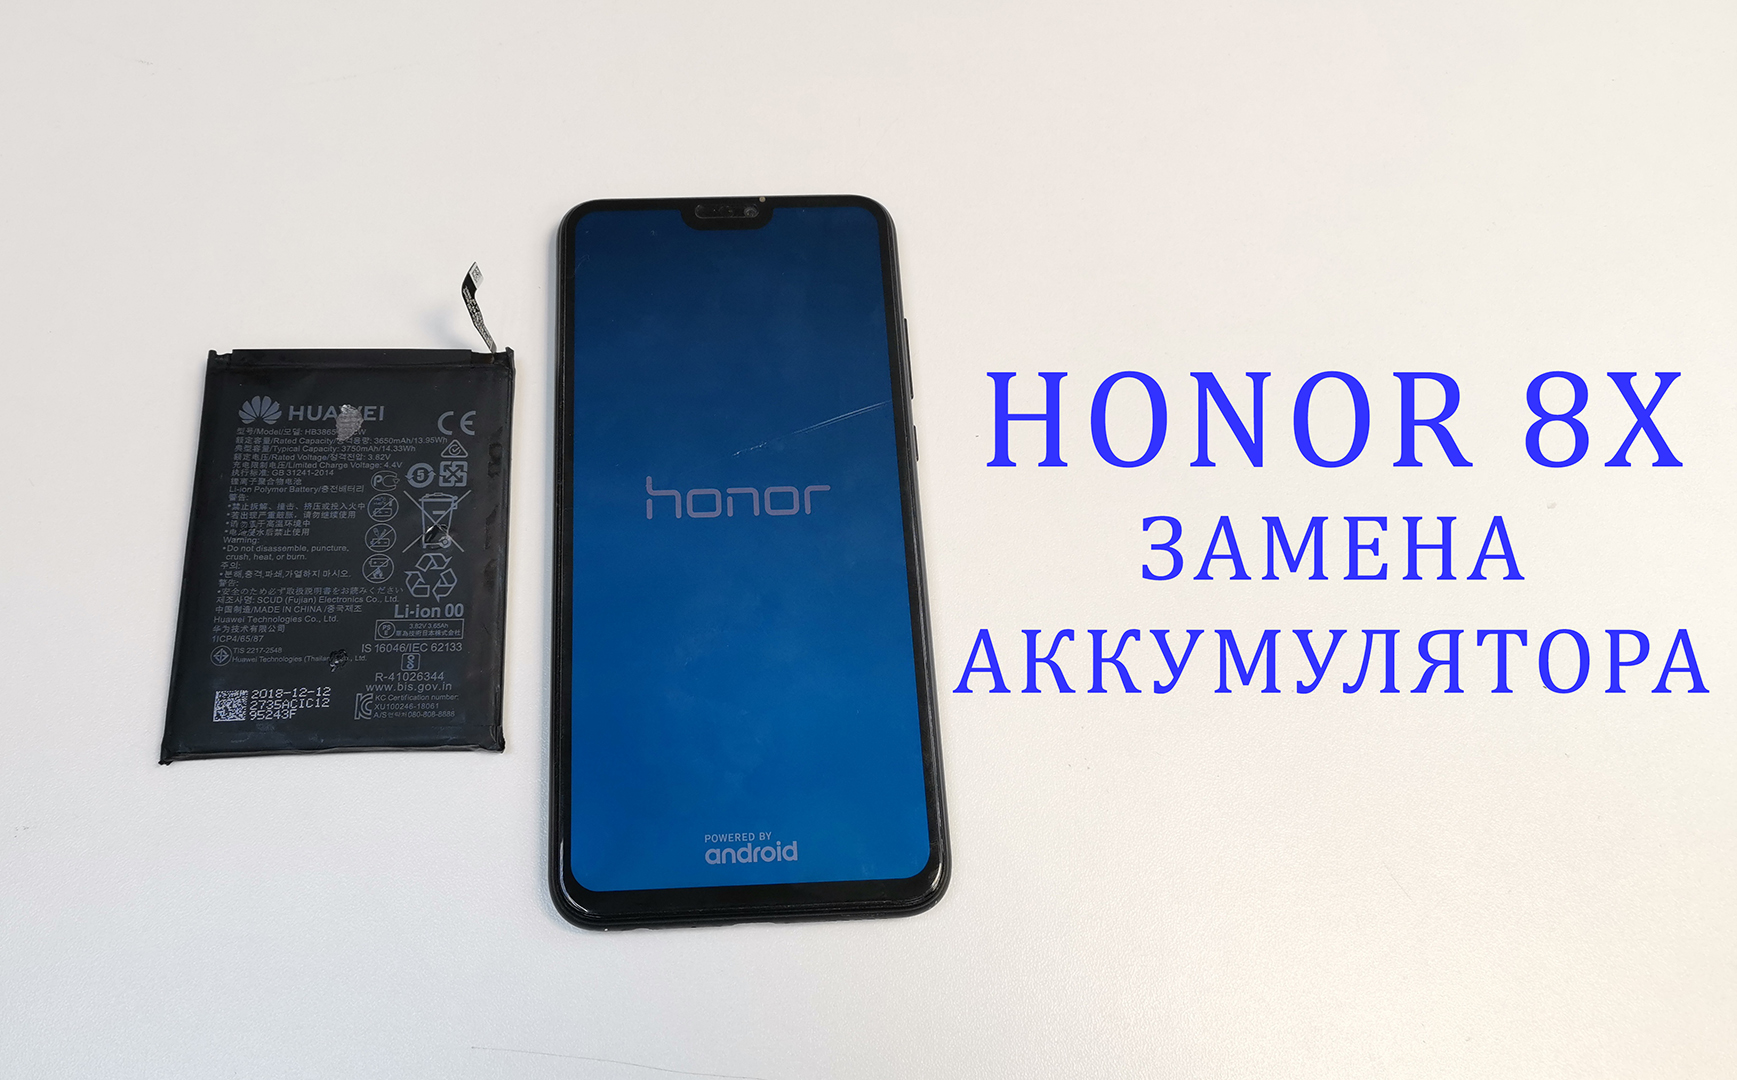 Honor 9x аккумулятор. Аккумулятор хонор 8х. Аккумулятор Honor х8. JSN-l21 аккумулятор Honor 8x. Honor 7x аккумулятор.